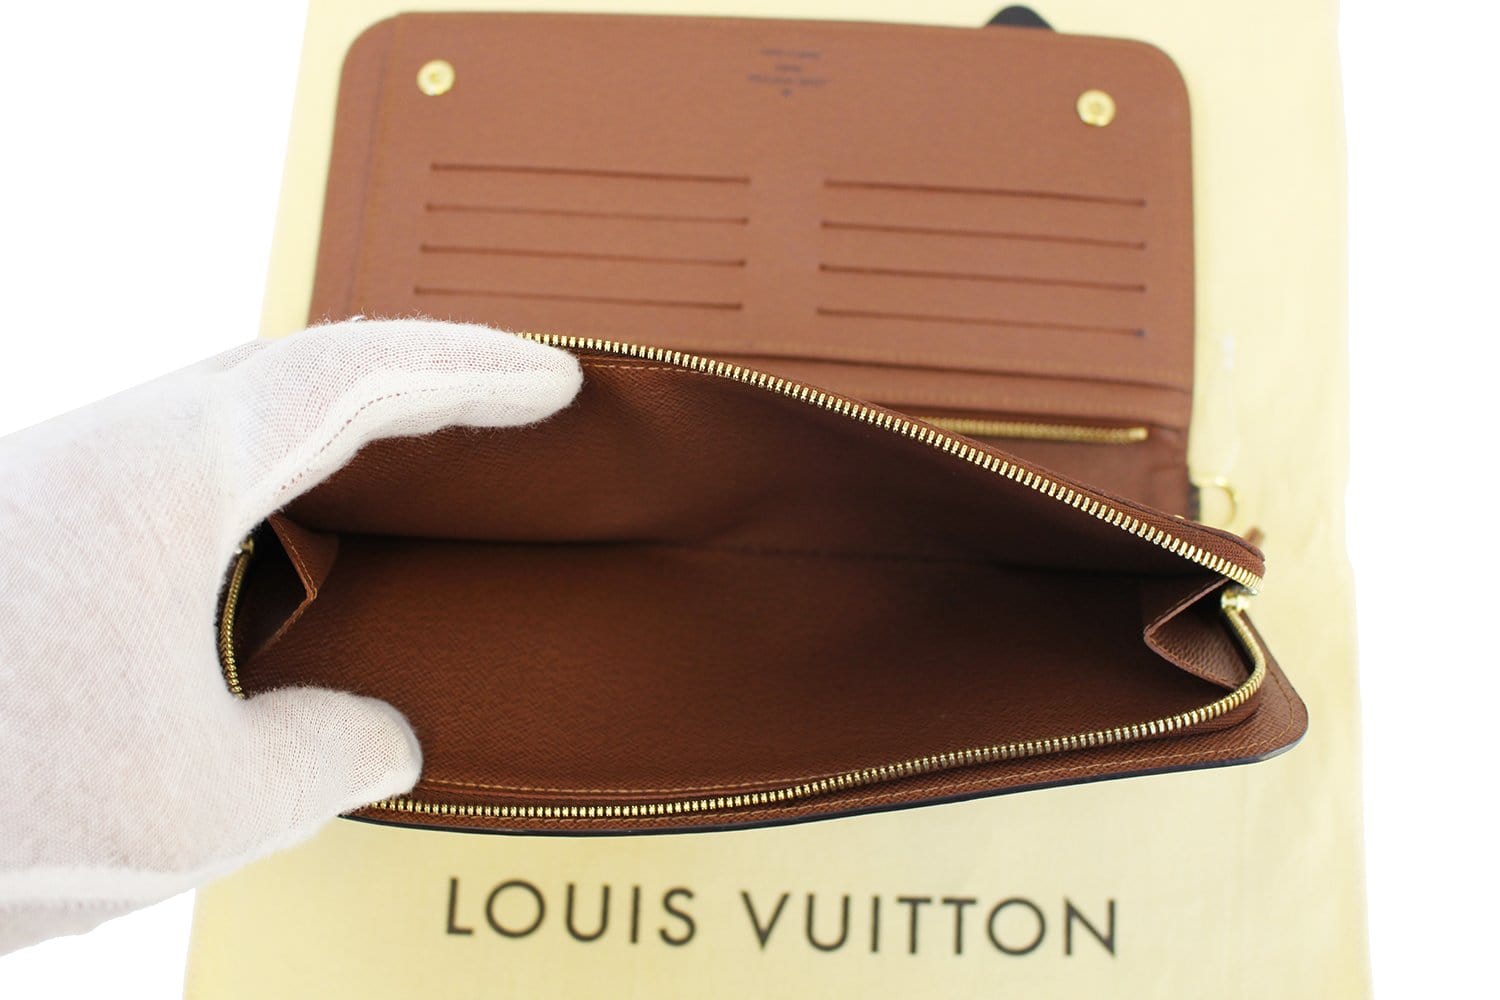 Louis Vuitton Insolite Organizer & Insolite Wallet Comparison